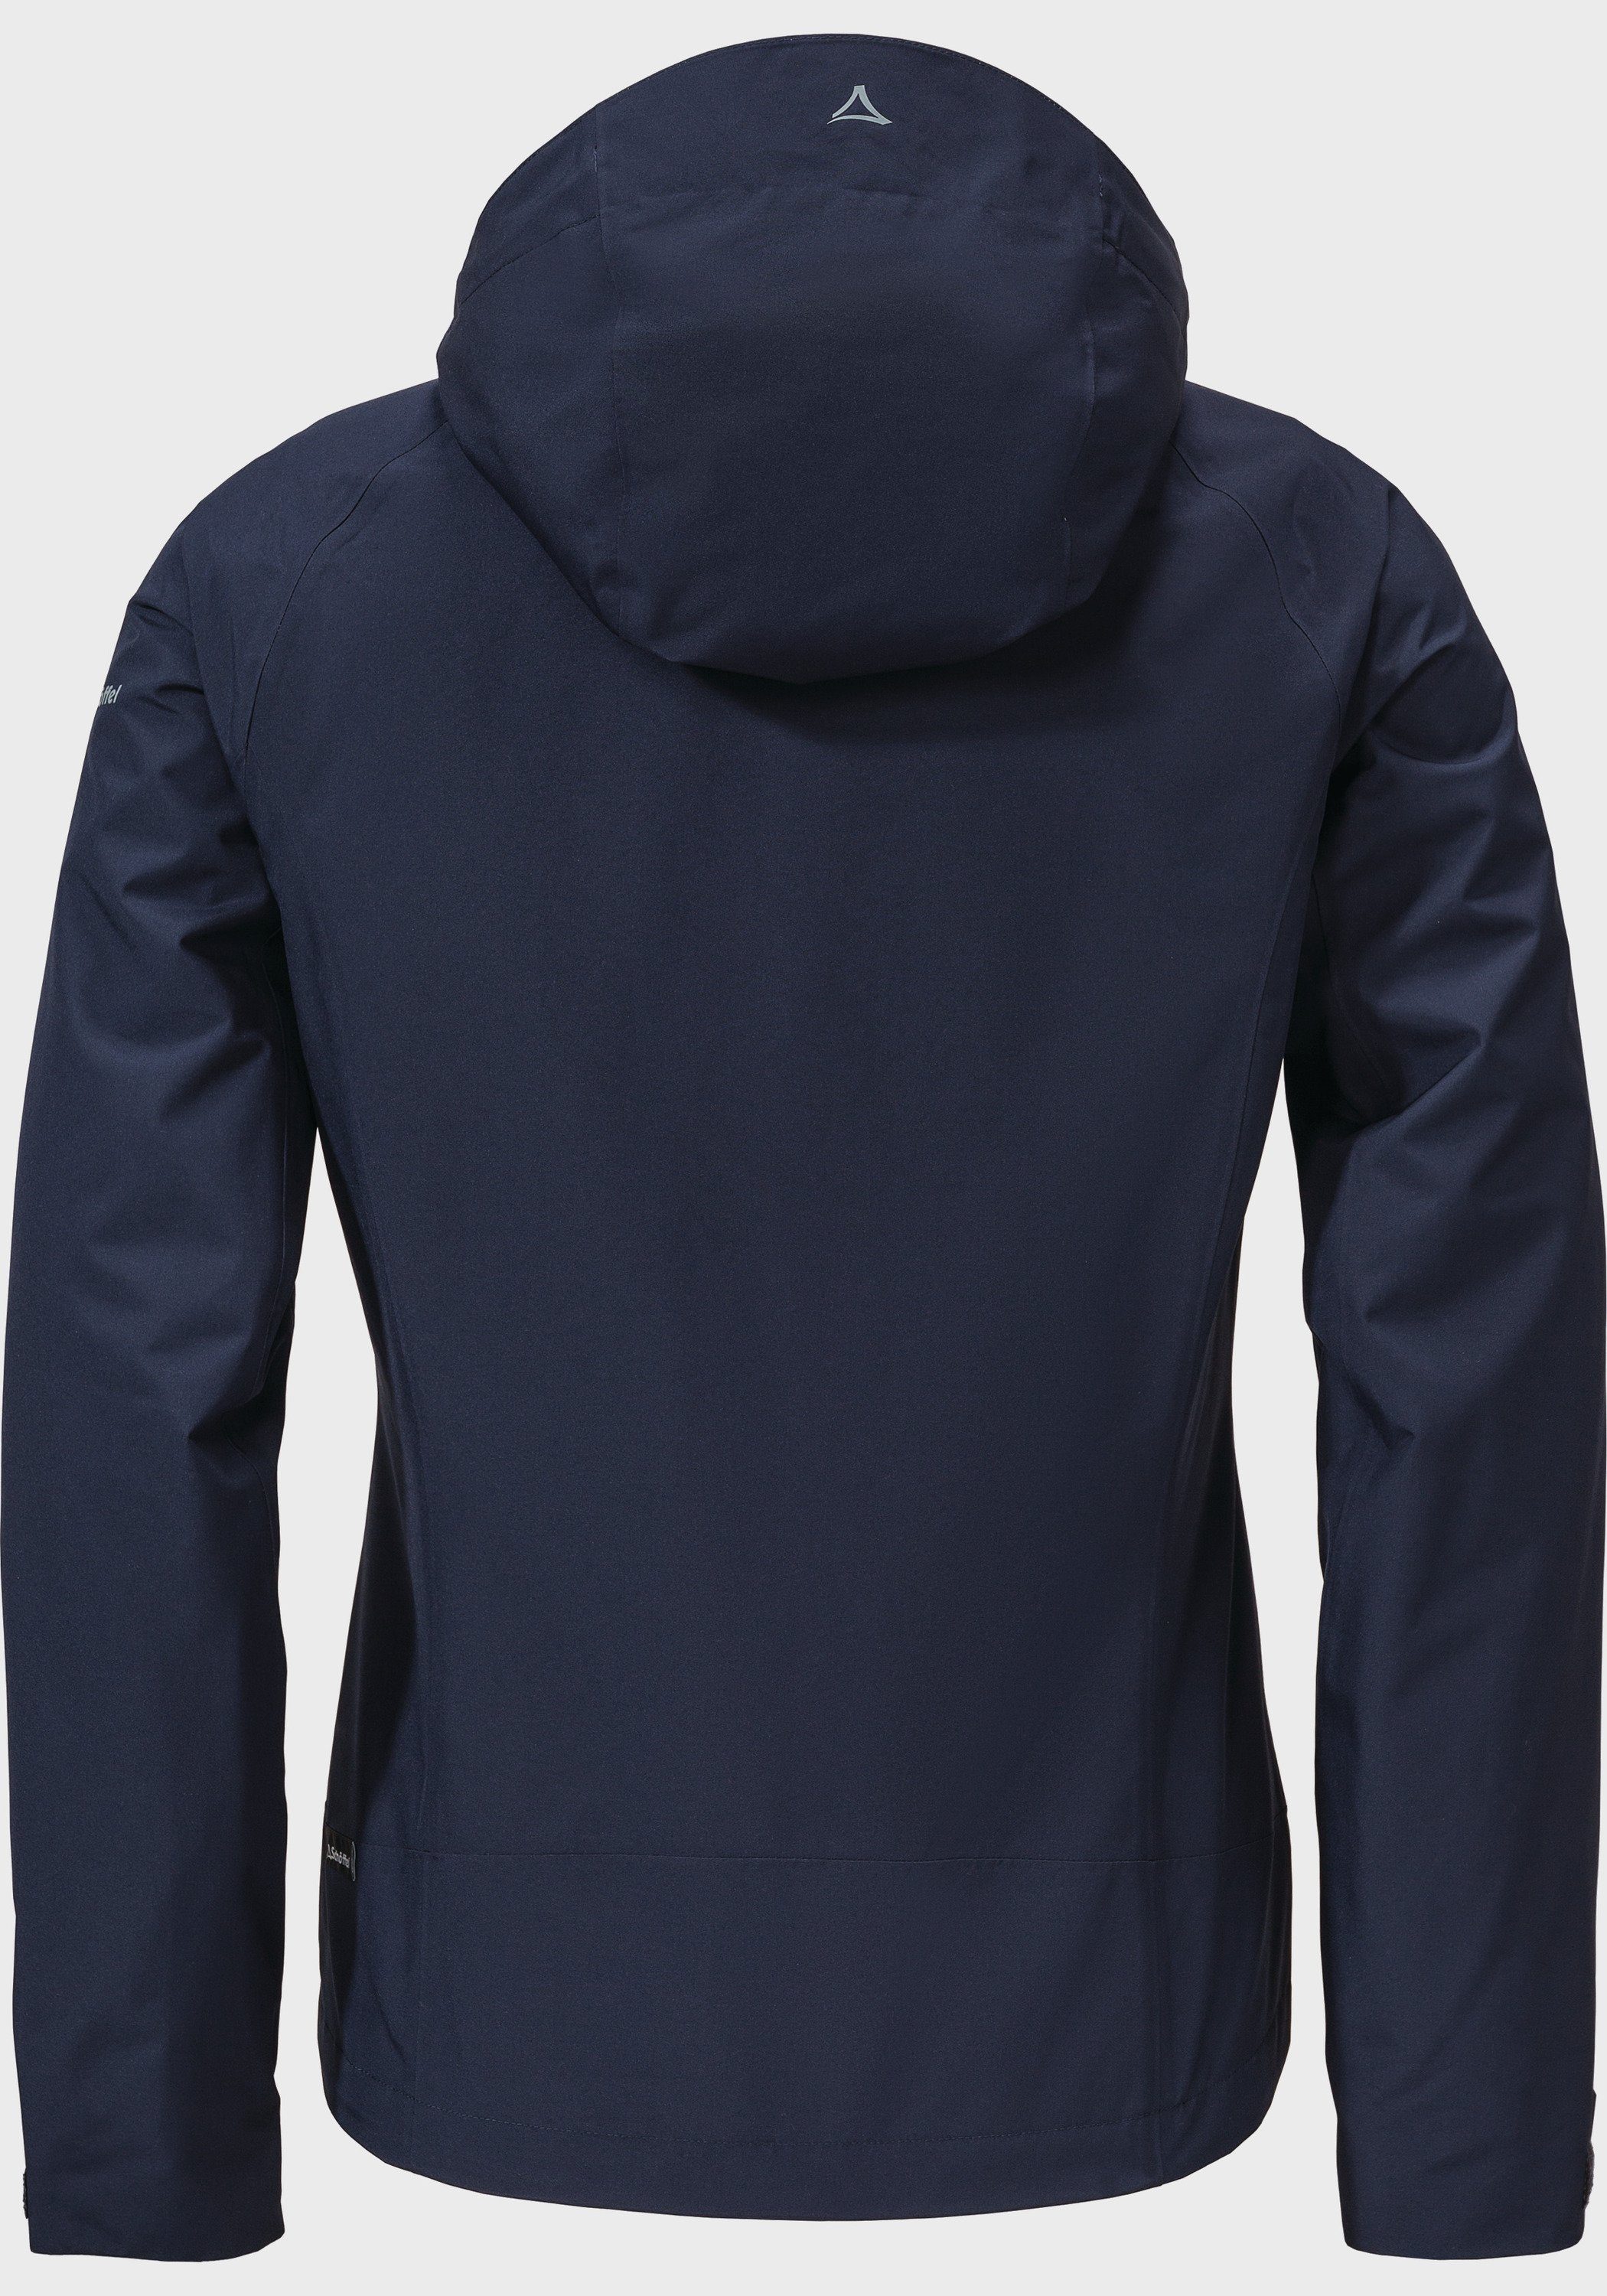 L Schöffel Wamberg Outdoorjacke blau Jacket